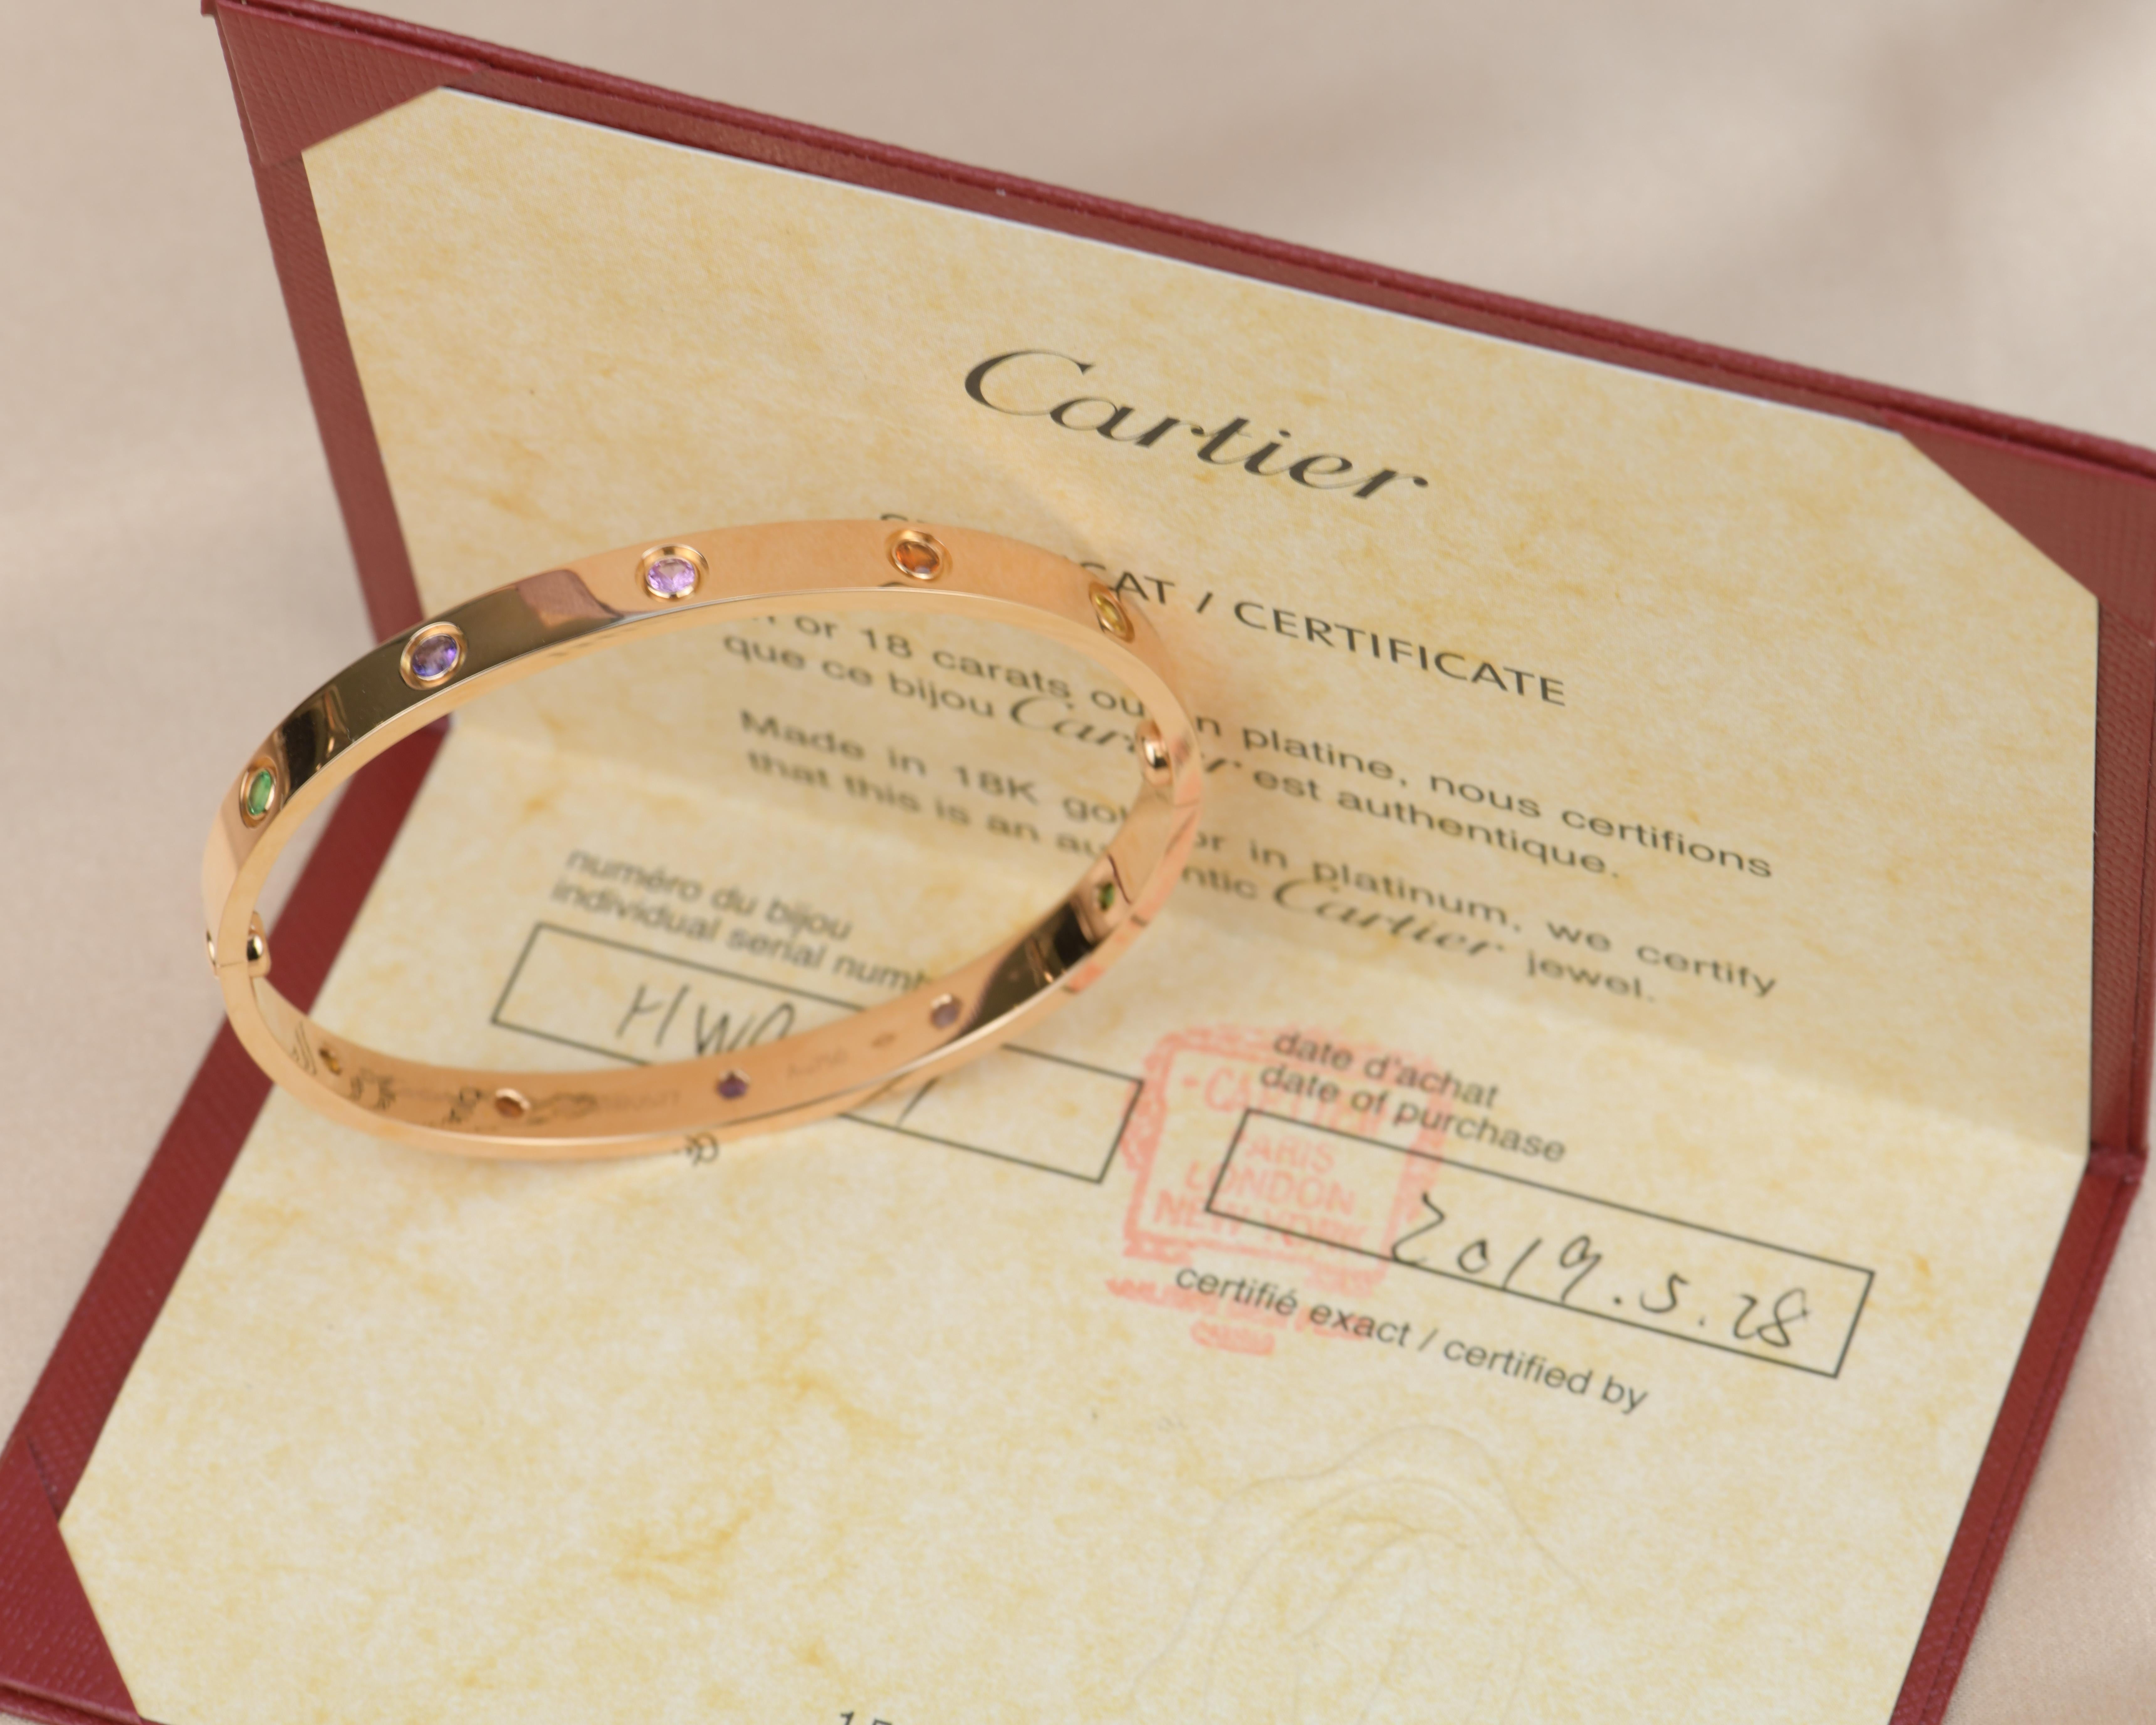 Brilliant Cut Cartier Love Bracelet Multi Gem Rainbow Rose Gold